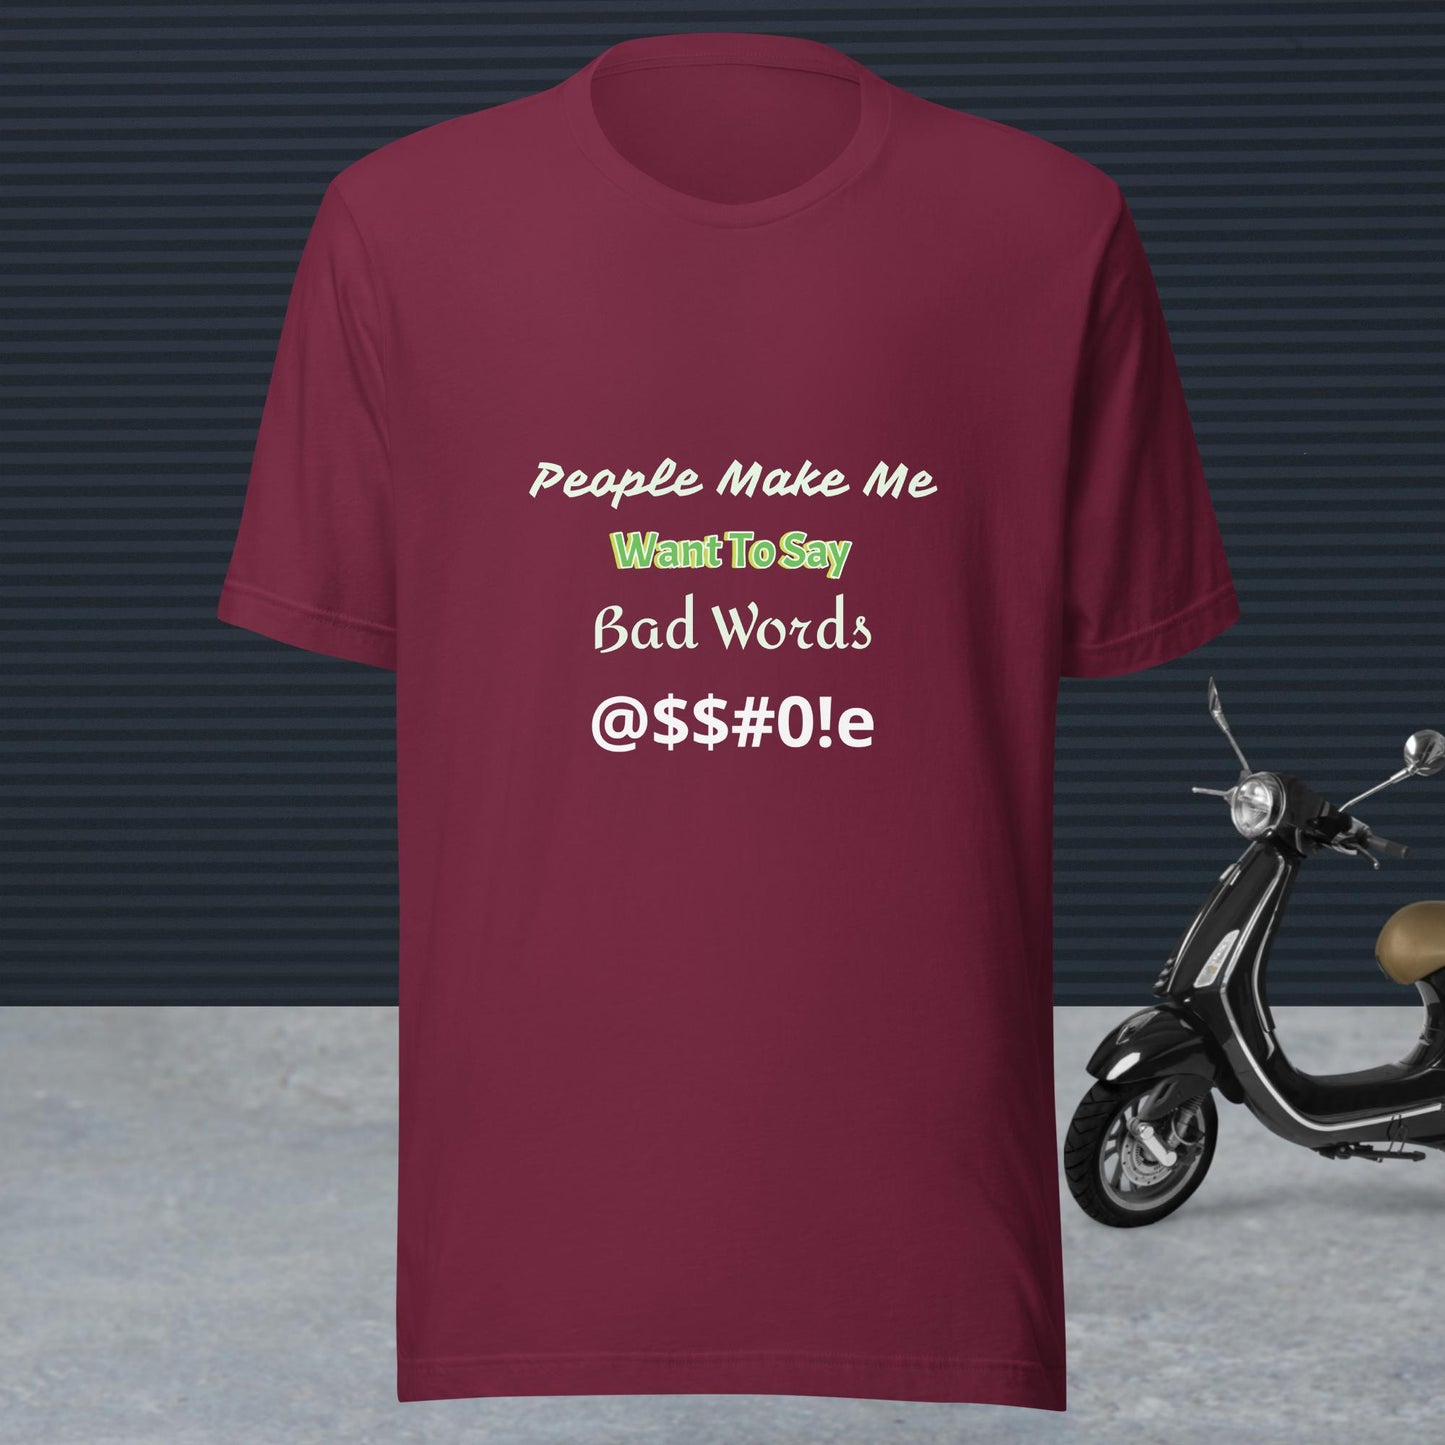 People Make Me Say Bad Words t-shirt